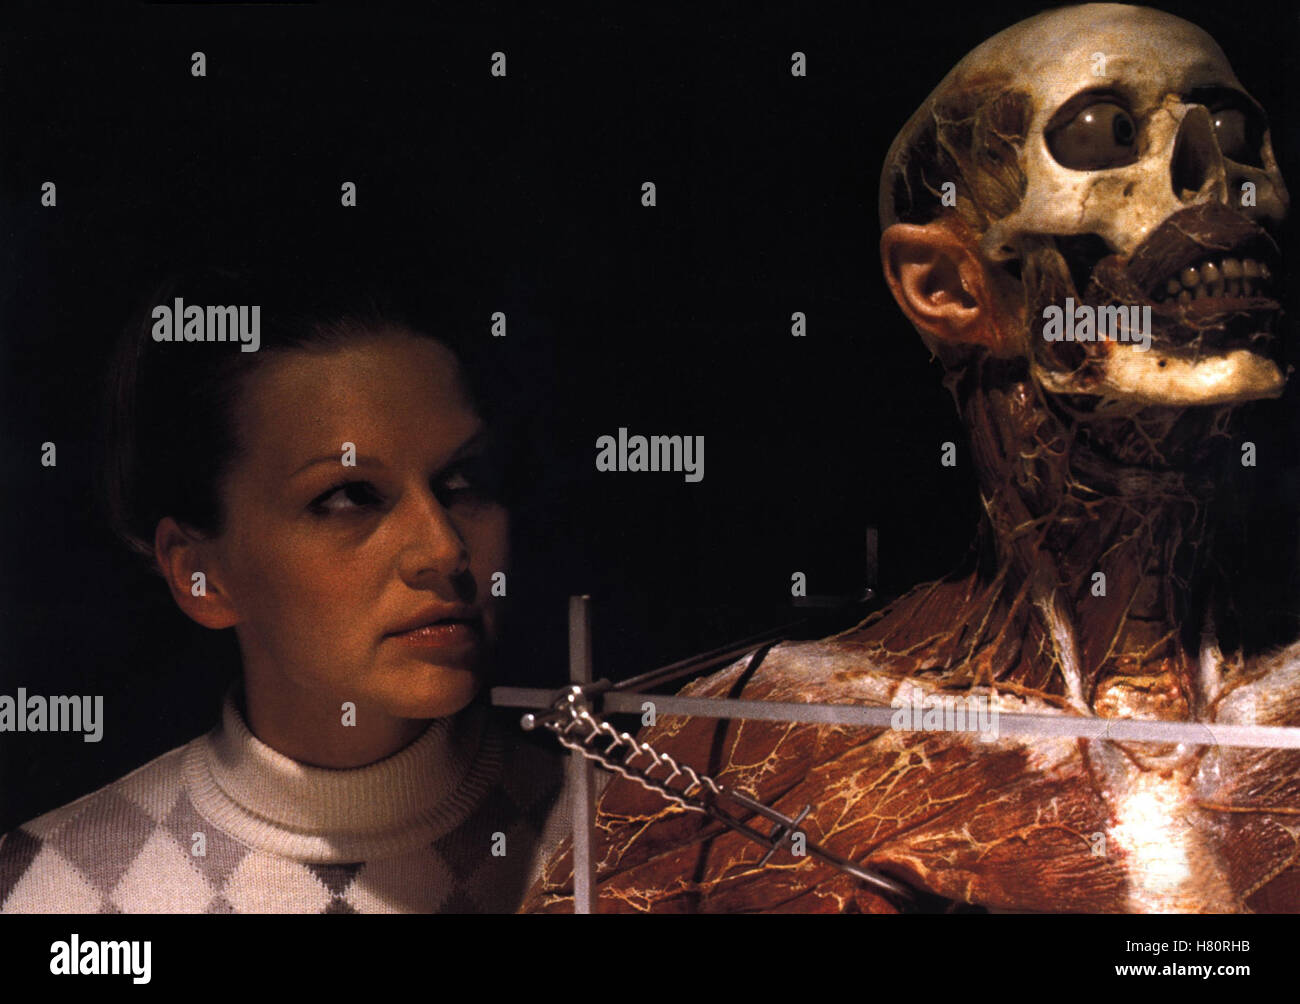 ANATOMIE, D 2000, Regie: Stefan Ruzowitzky, ANNA LOOS, Stichwort: Mumie, Pathologie Stock Photo